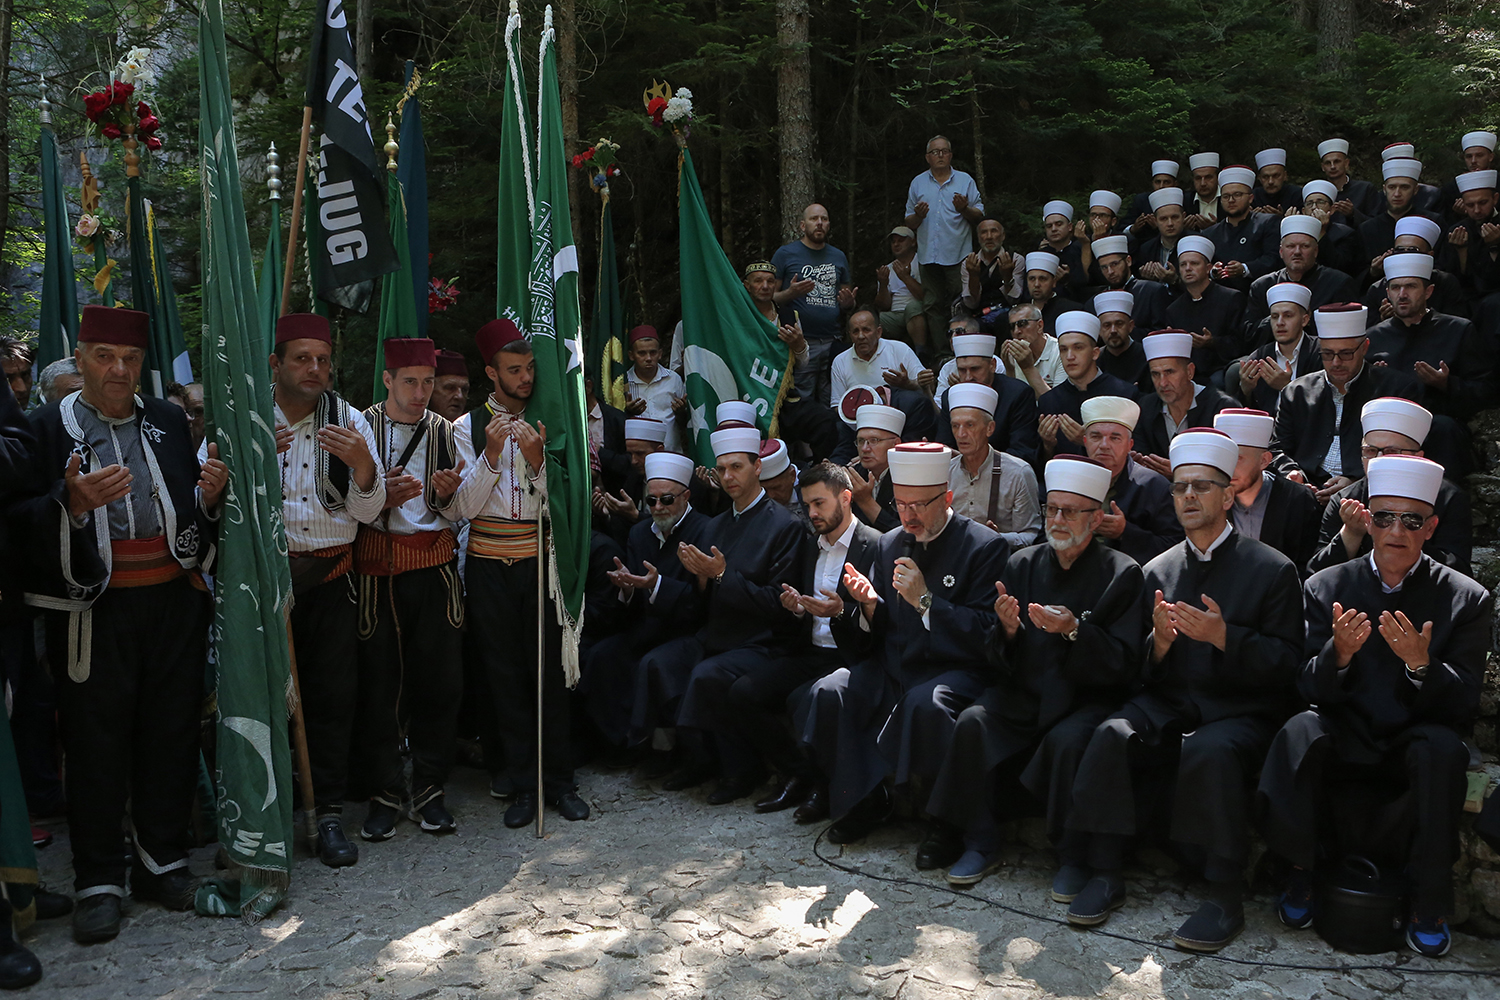 Muslim clerics at prayer (photo: Konstantin Novakovic)